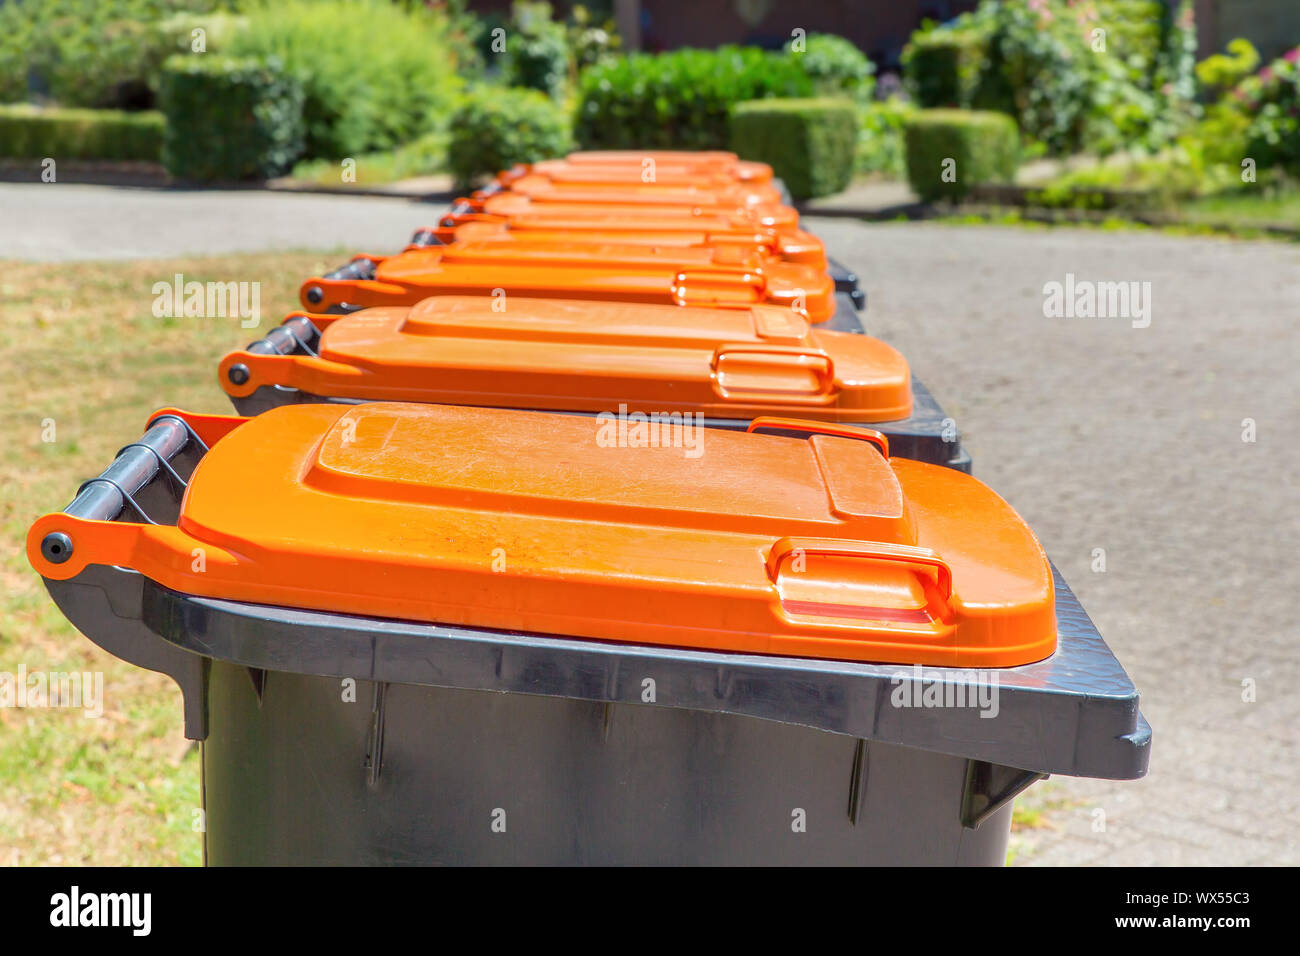 Contenedores de basura naranja fotografías e imágenes de alta resolución -  Alamy